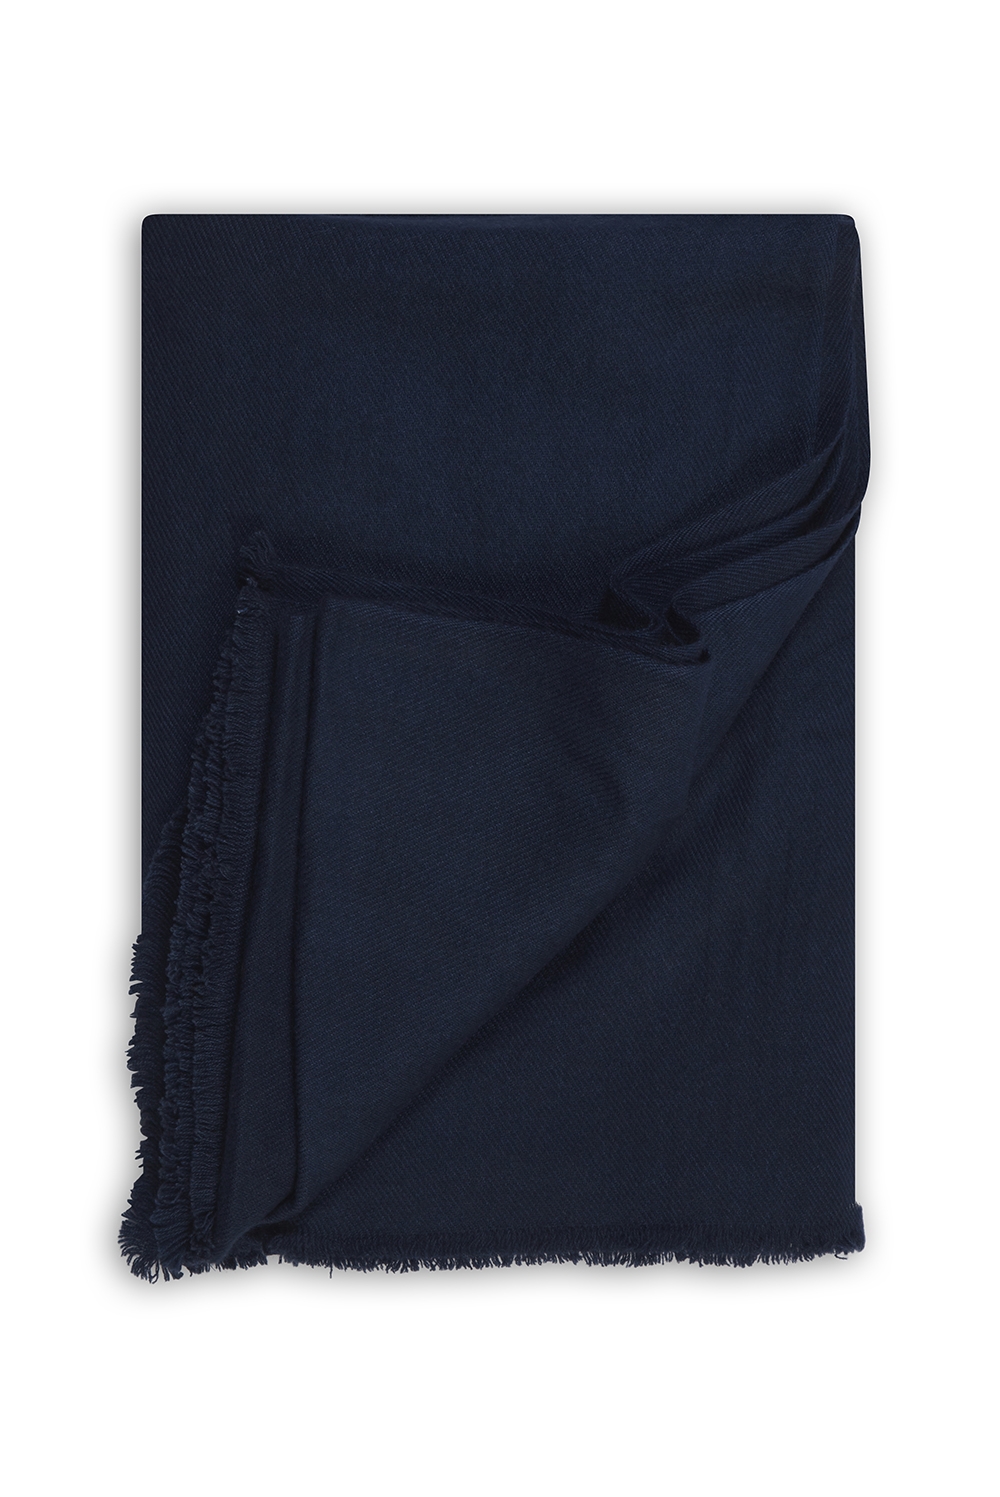 Cashmere cashmere donna cocooning toodoo plain l 220 x 220 blu navy 220x220cm